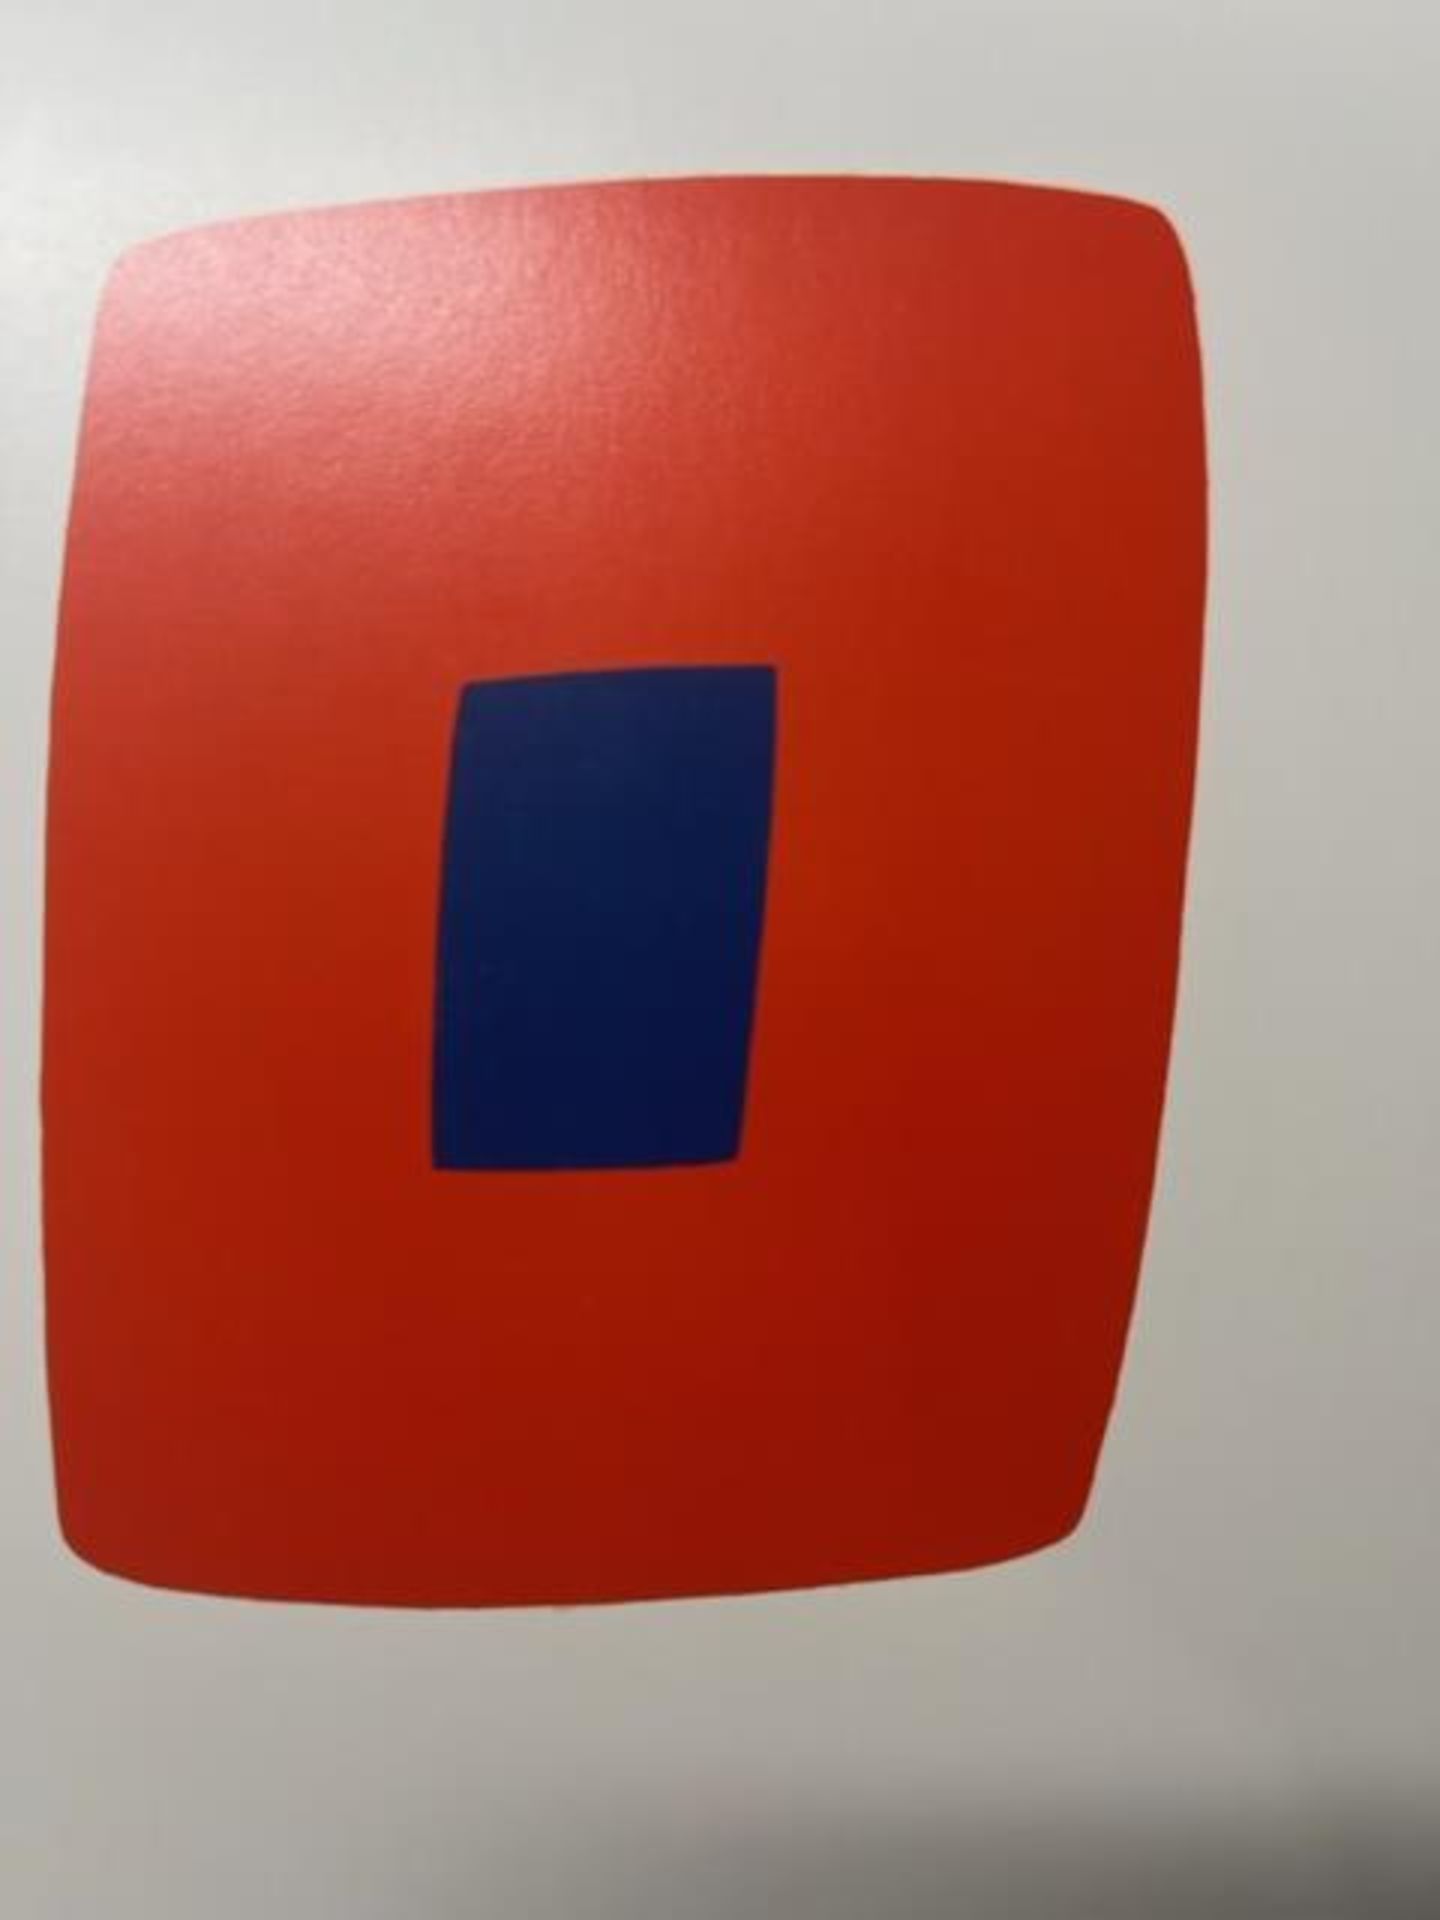 Ellsworth Kelly "Orange with Blue" Print. - Bild 4 aus 6